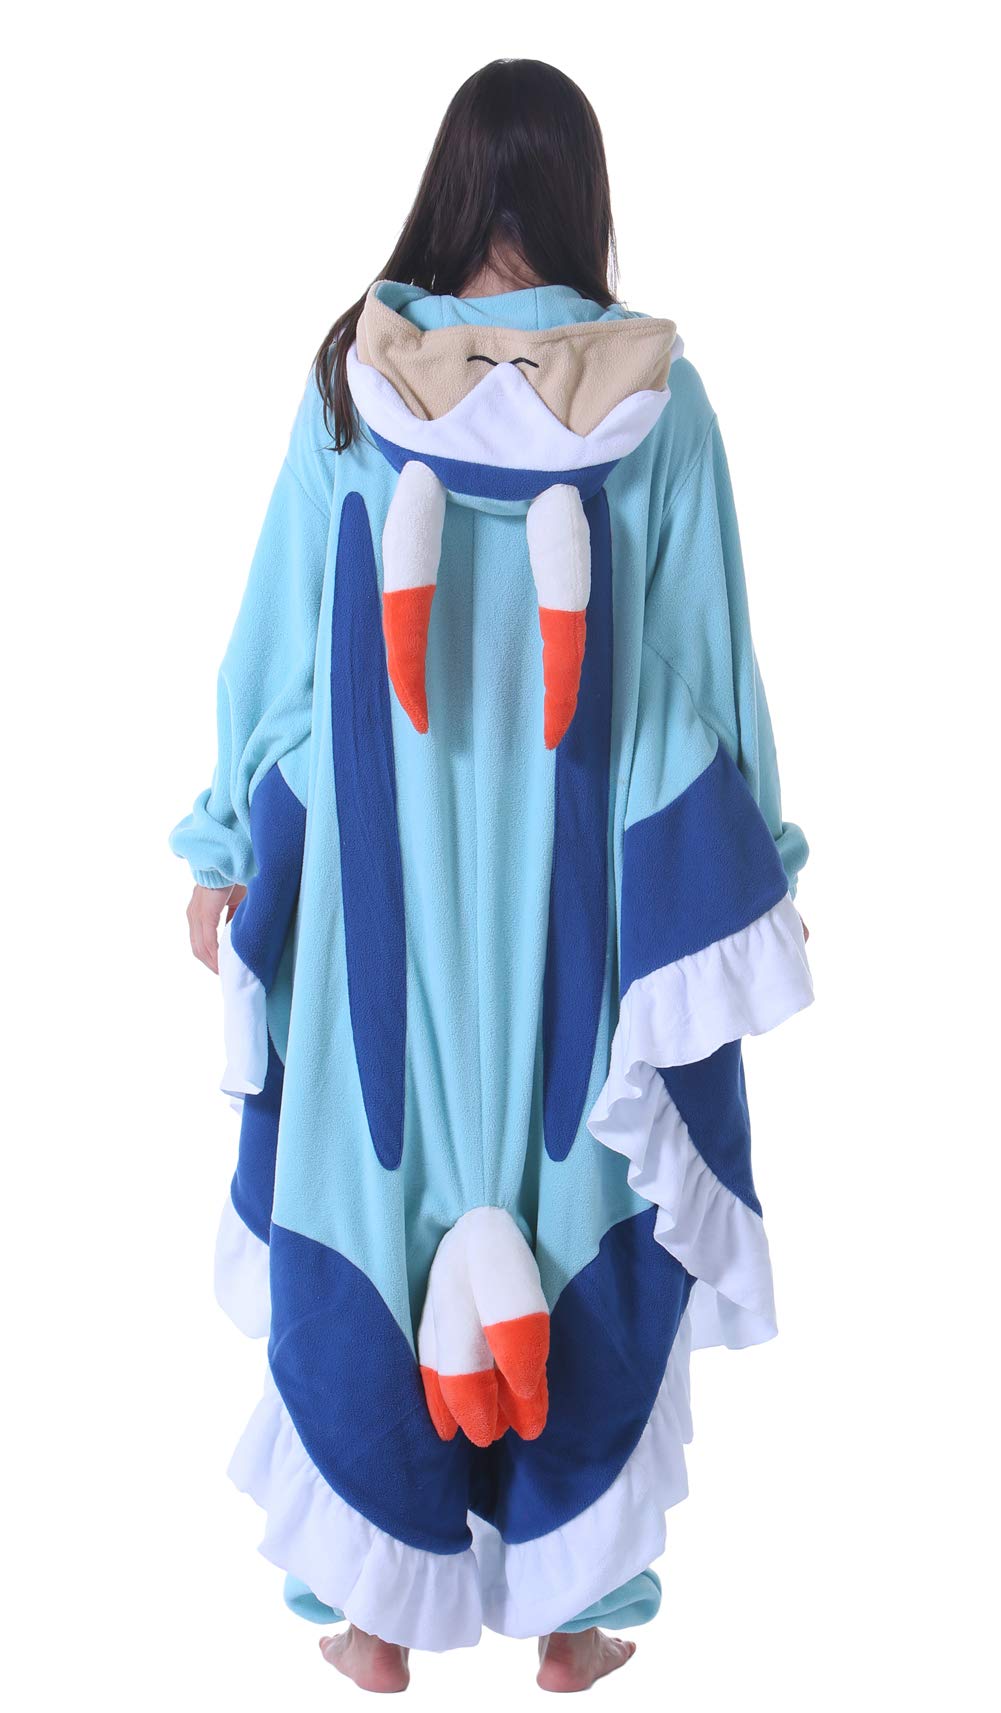 DELEY Unisex Blue Sea Hare Costume Adult Onesie, One Piece Pajamas, Halloween Cosplay Costumes Homewear Jumpsuit